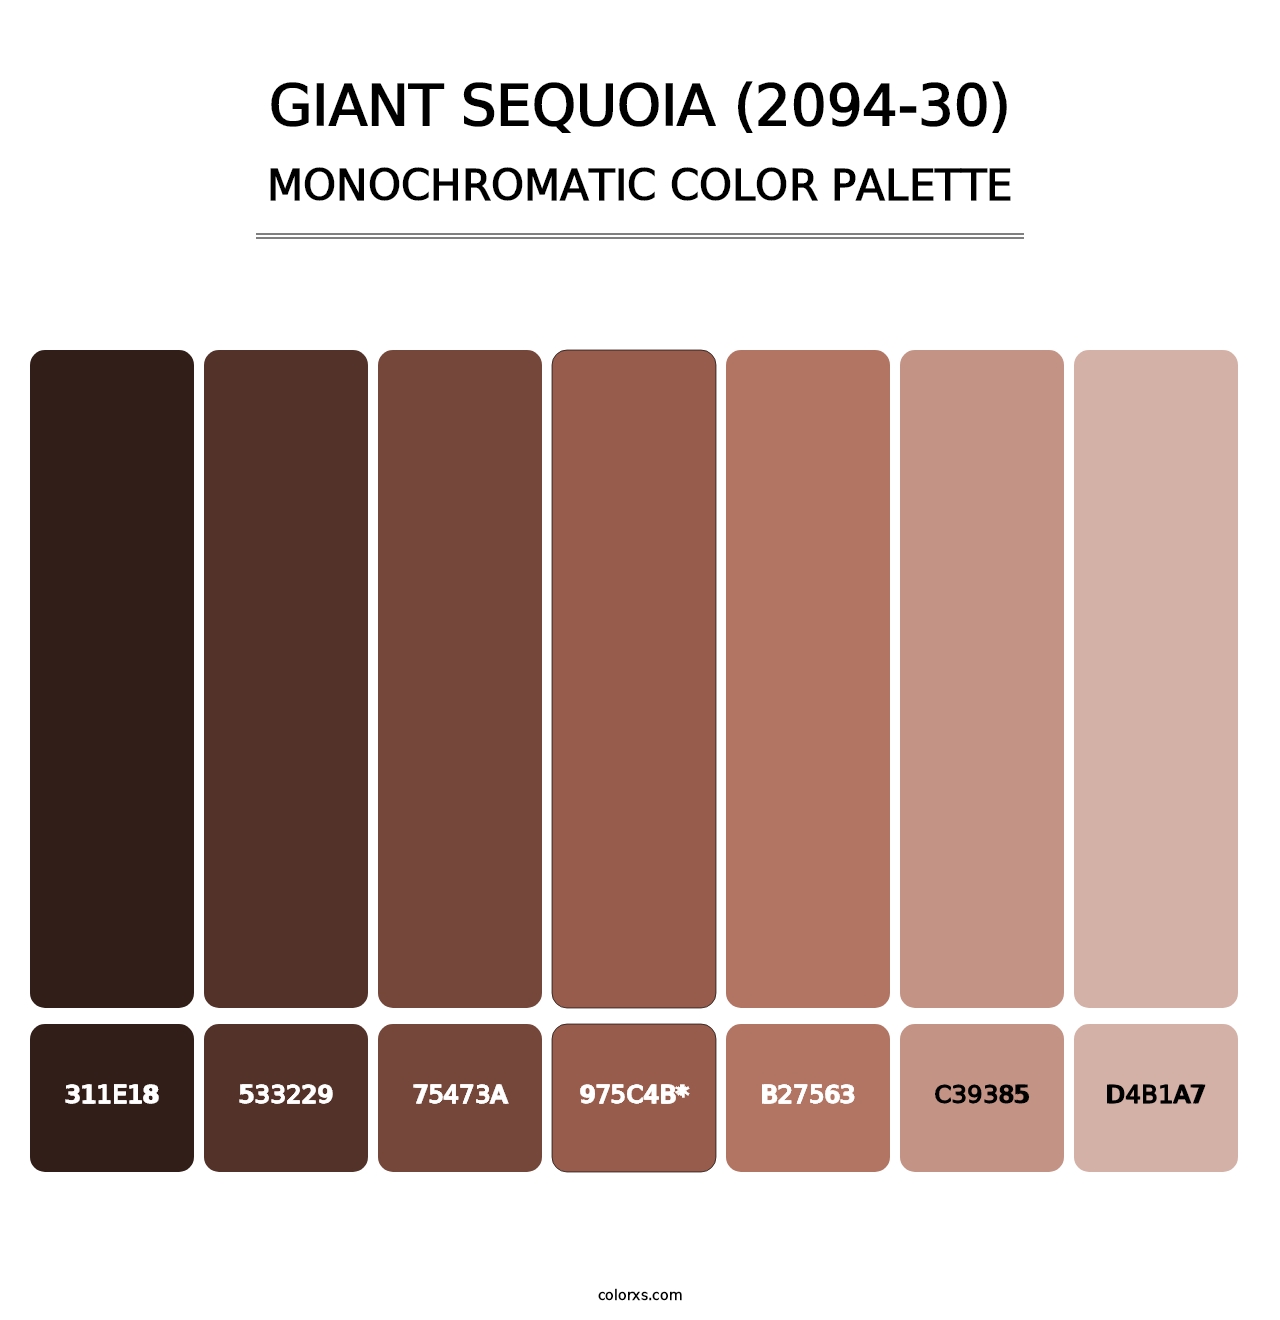 Giant Sequoia (2094-30) - Monochromatic Color Palette